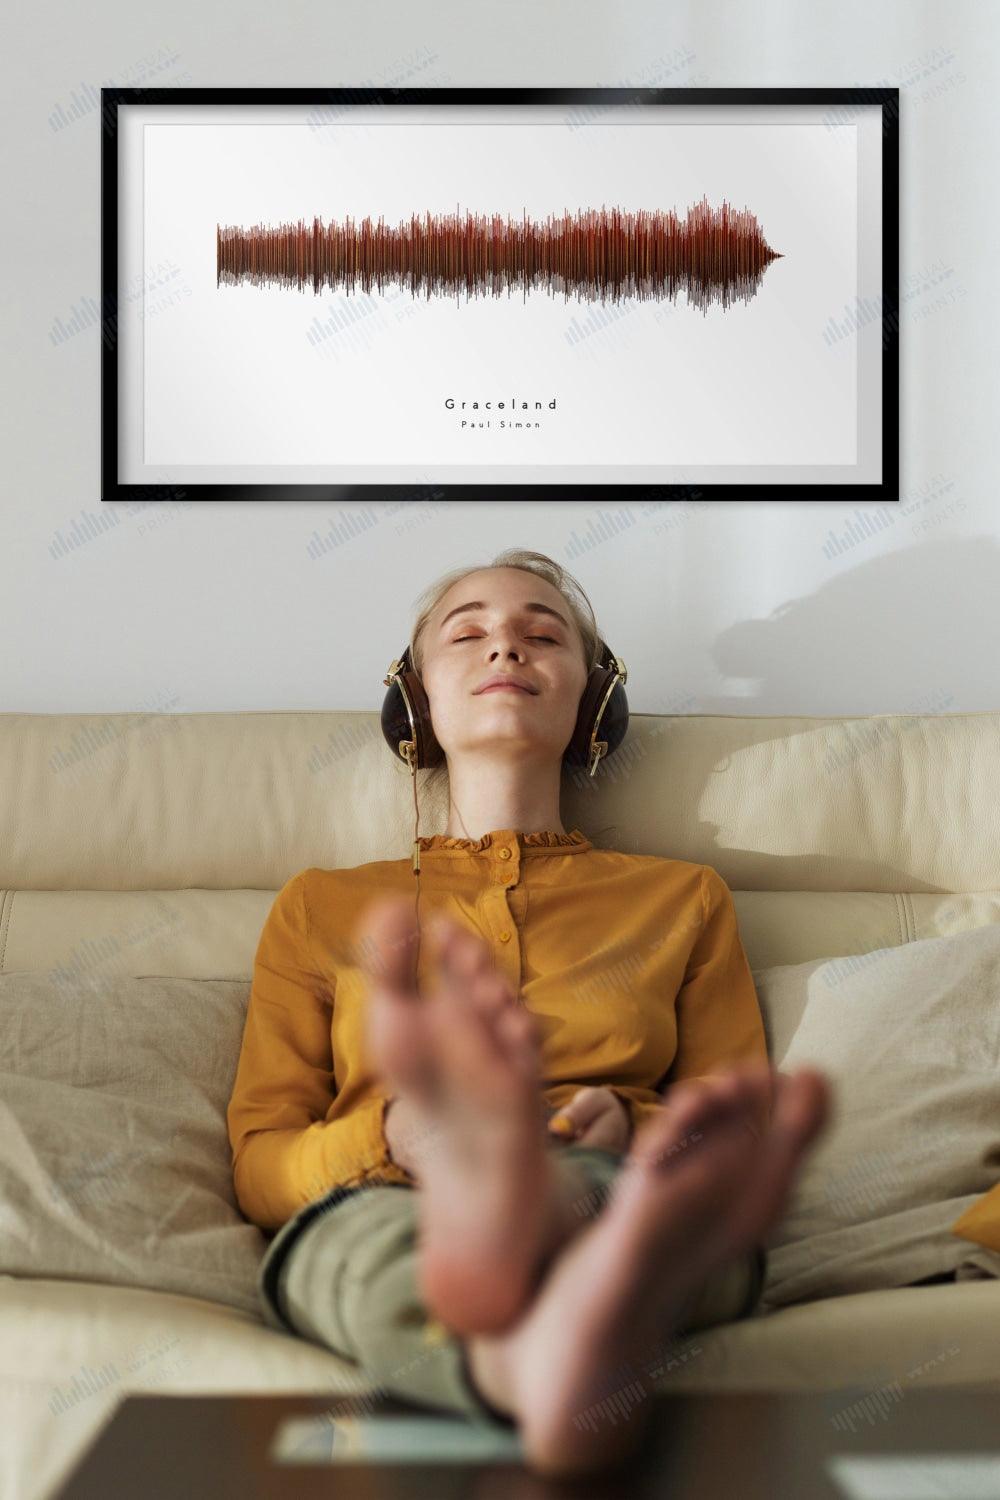 Graceland by Paul Simon - Visual Wave Prints